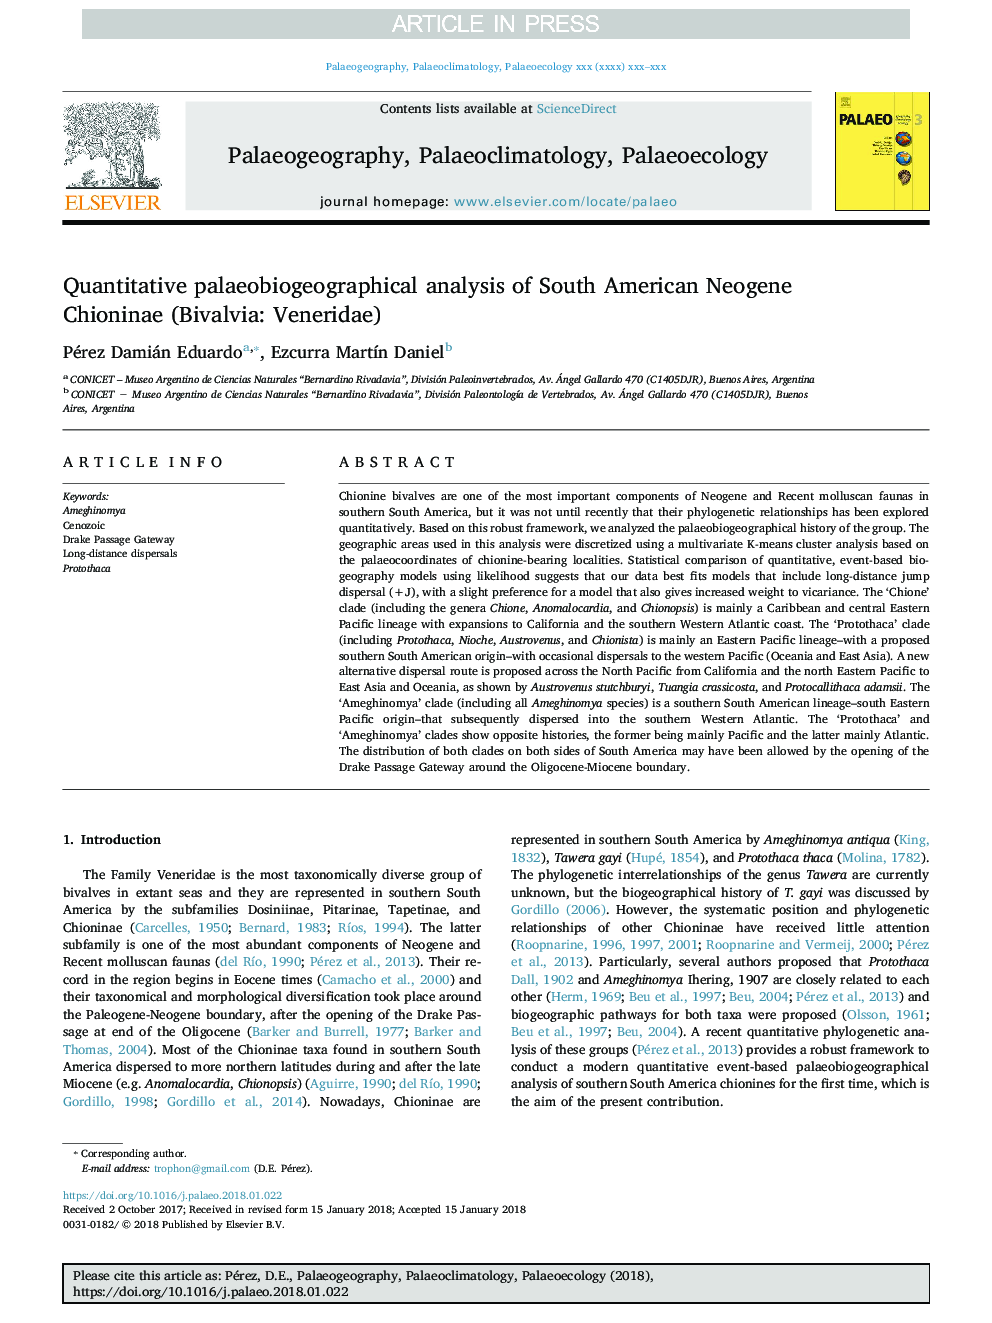 Quantitative palaeobiogeographical analysis of South American Neogene Chioninae (Bivalvia: Veneridae)